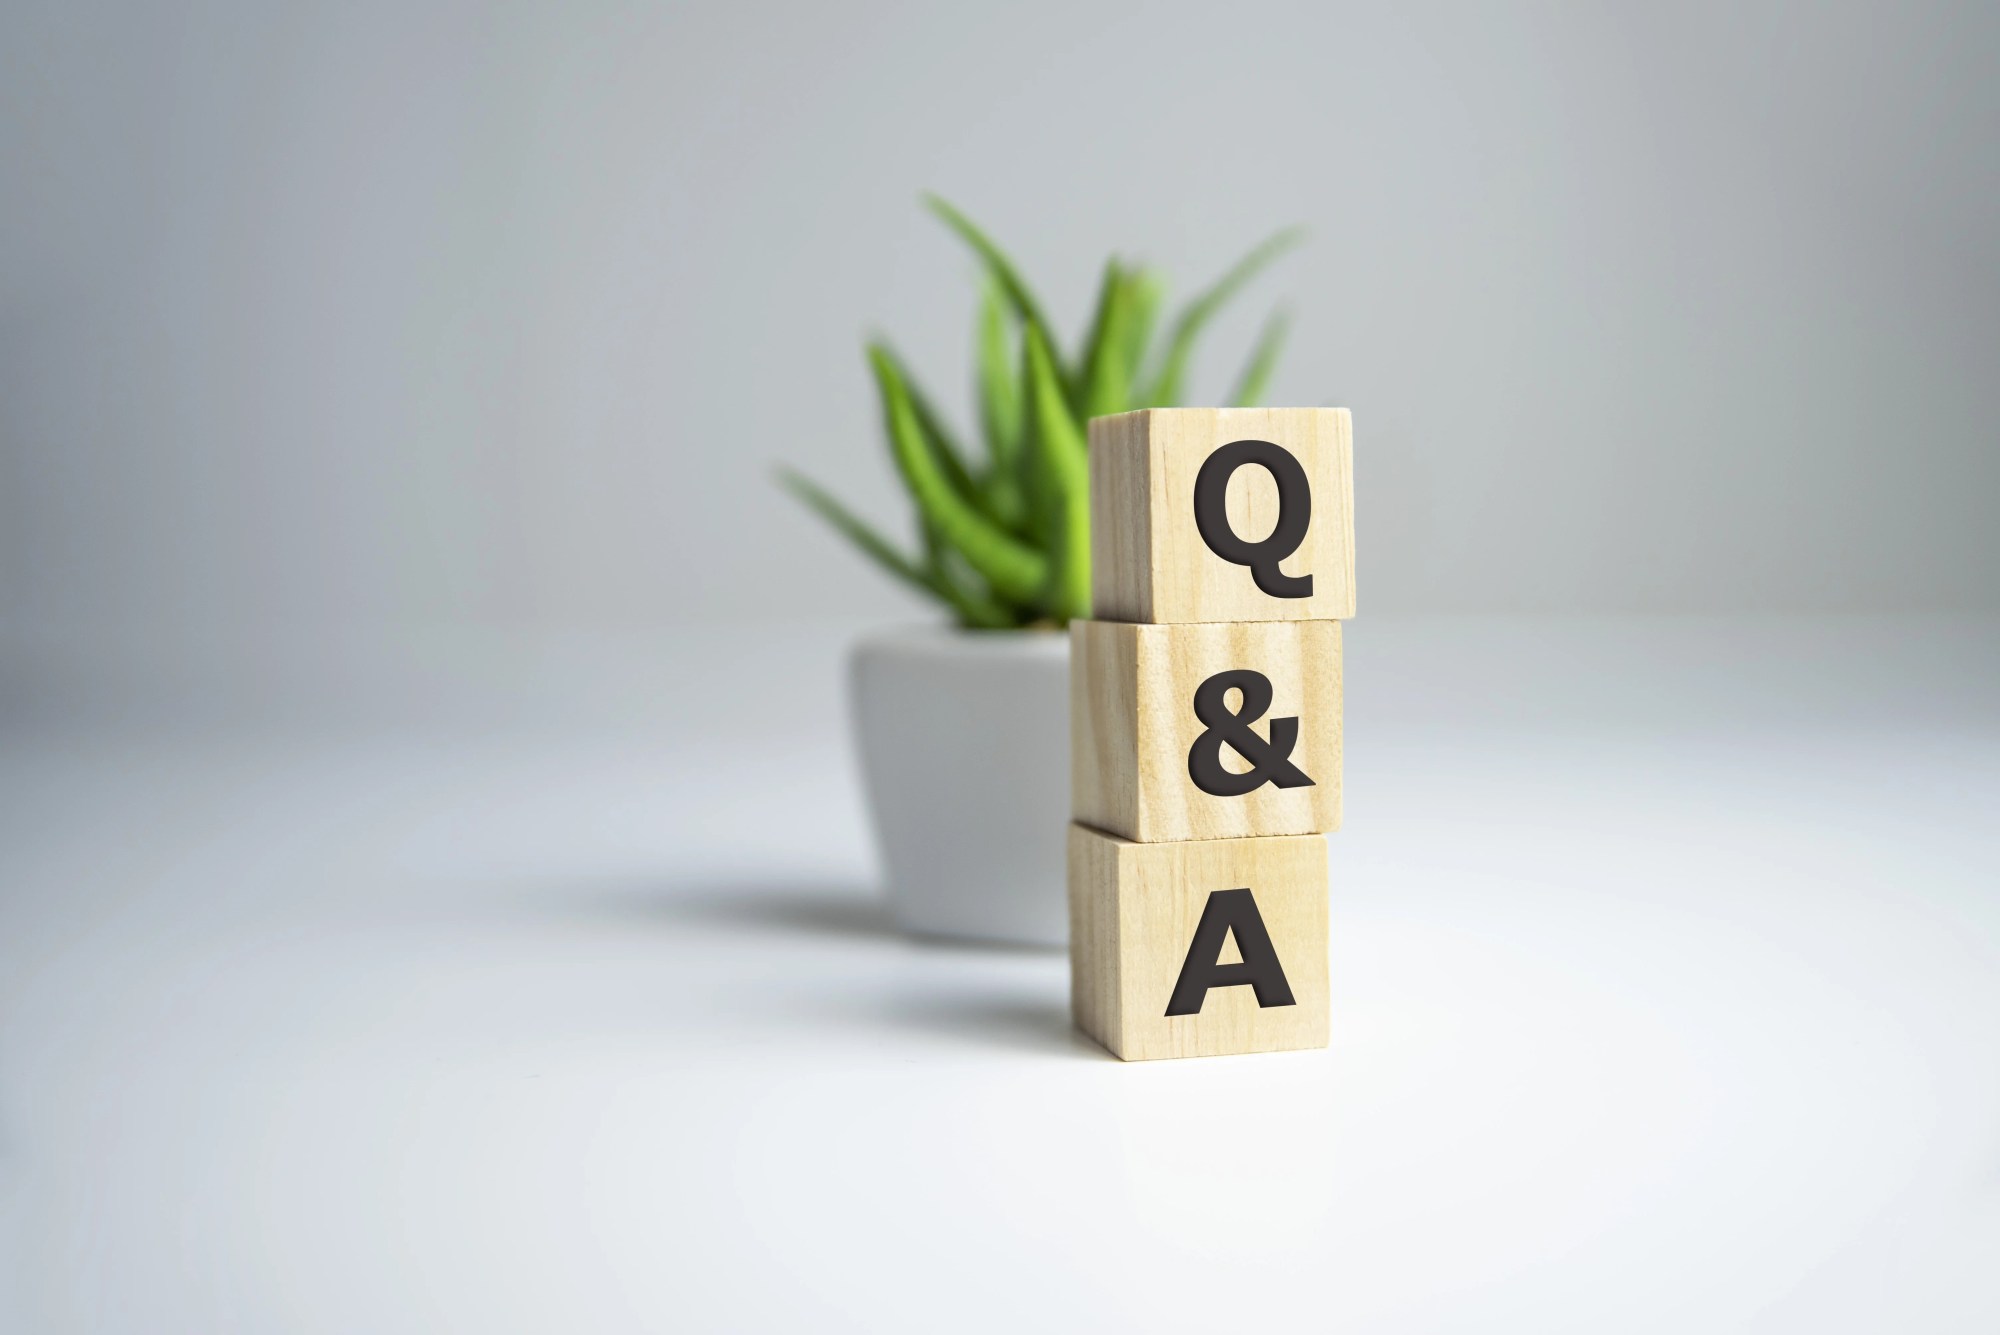 「Q&A」のイメージ_Q&Aとプリントされた木製ブロック